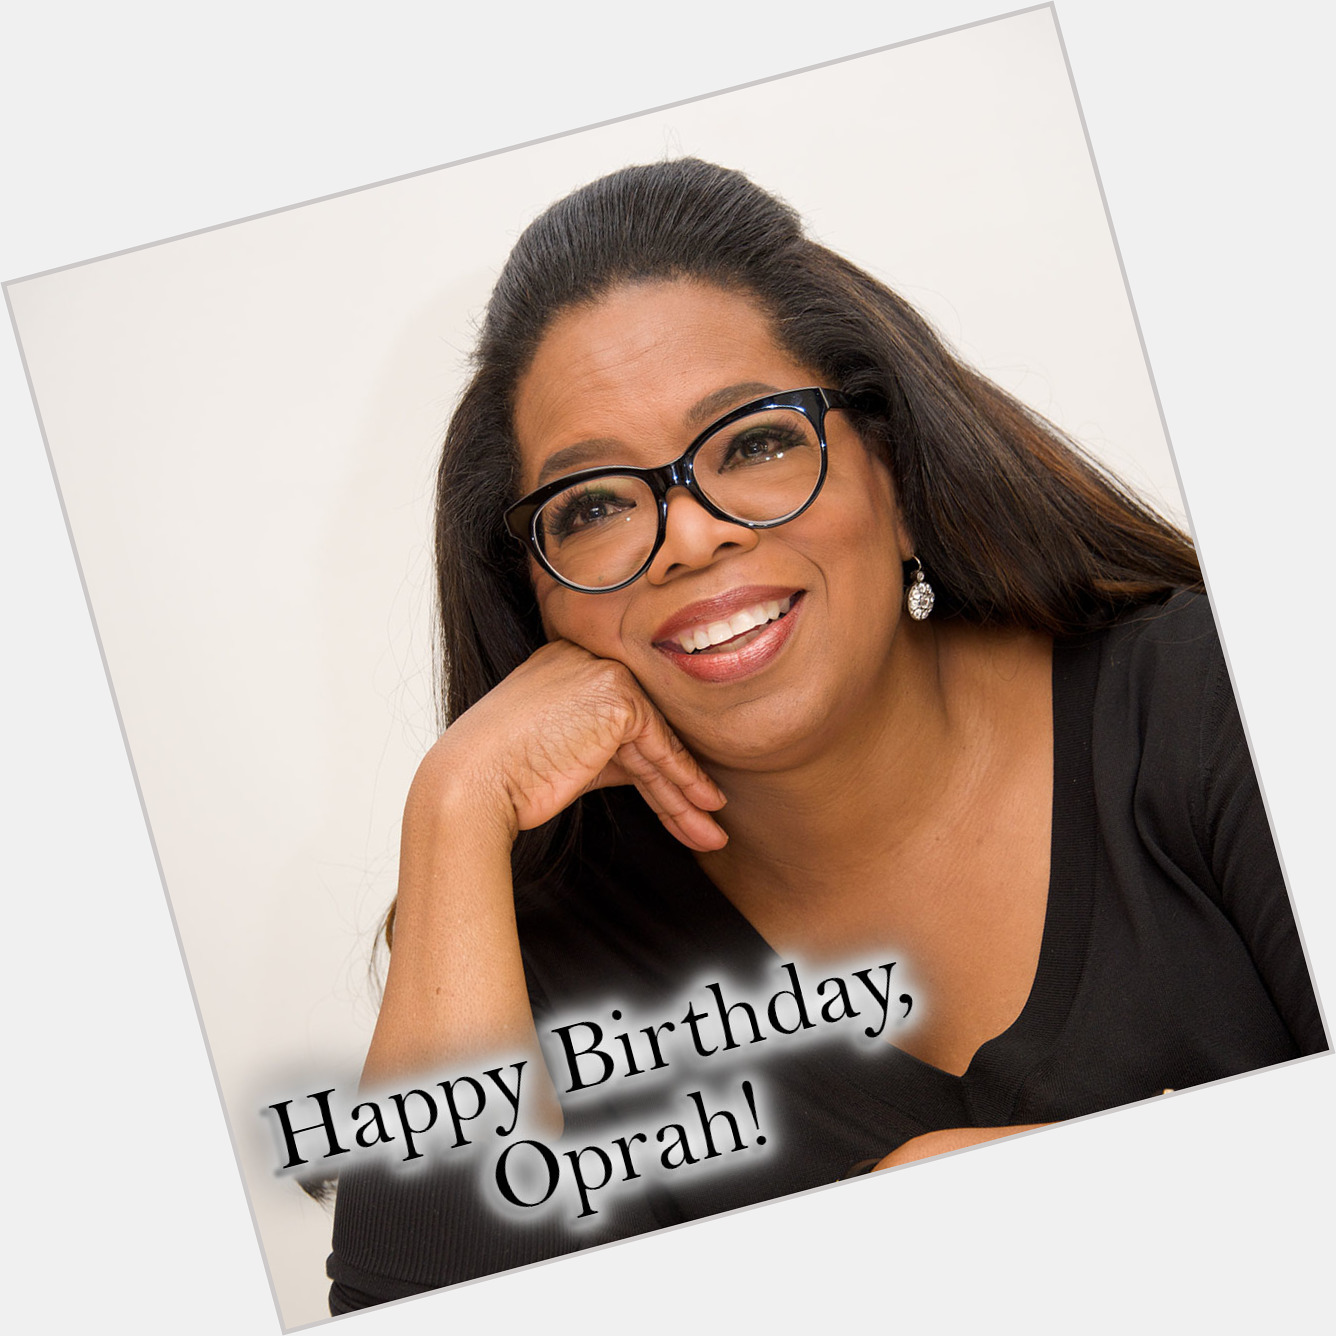 Happy Birthday, Oprah Winfrey! She\s 67 years old today. 